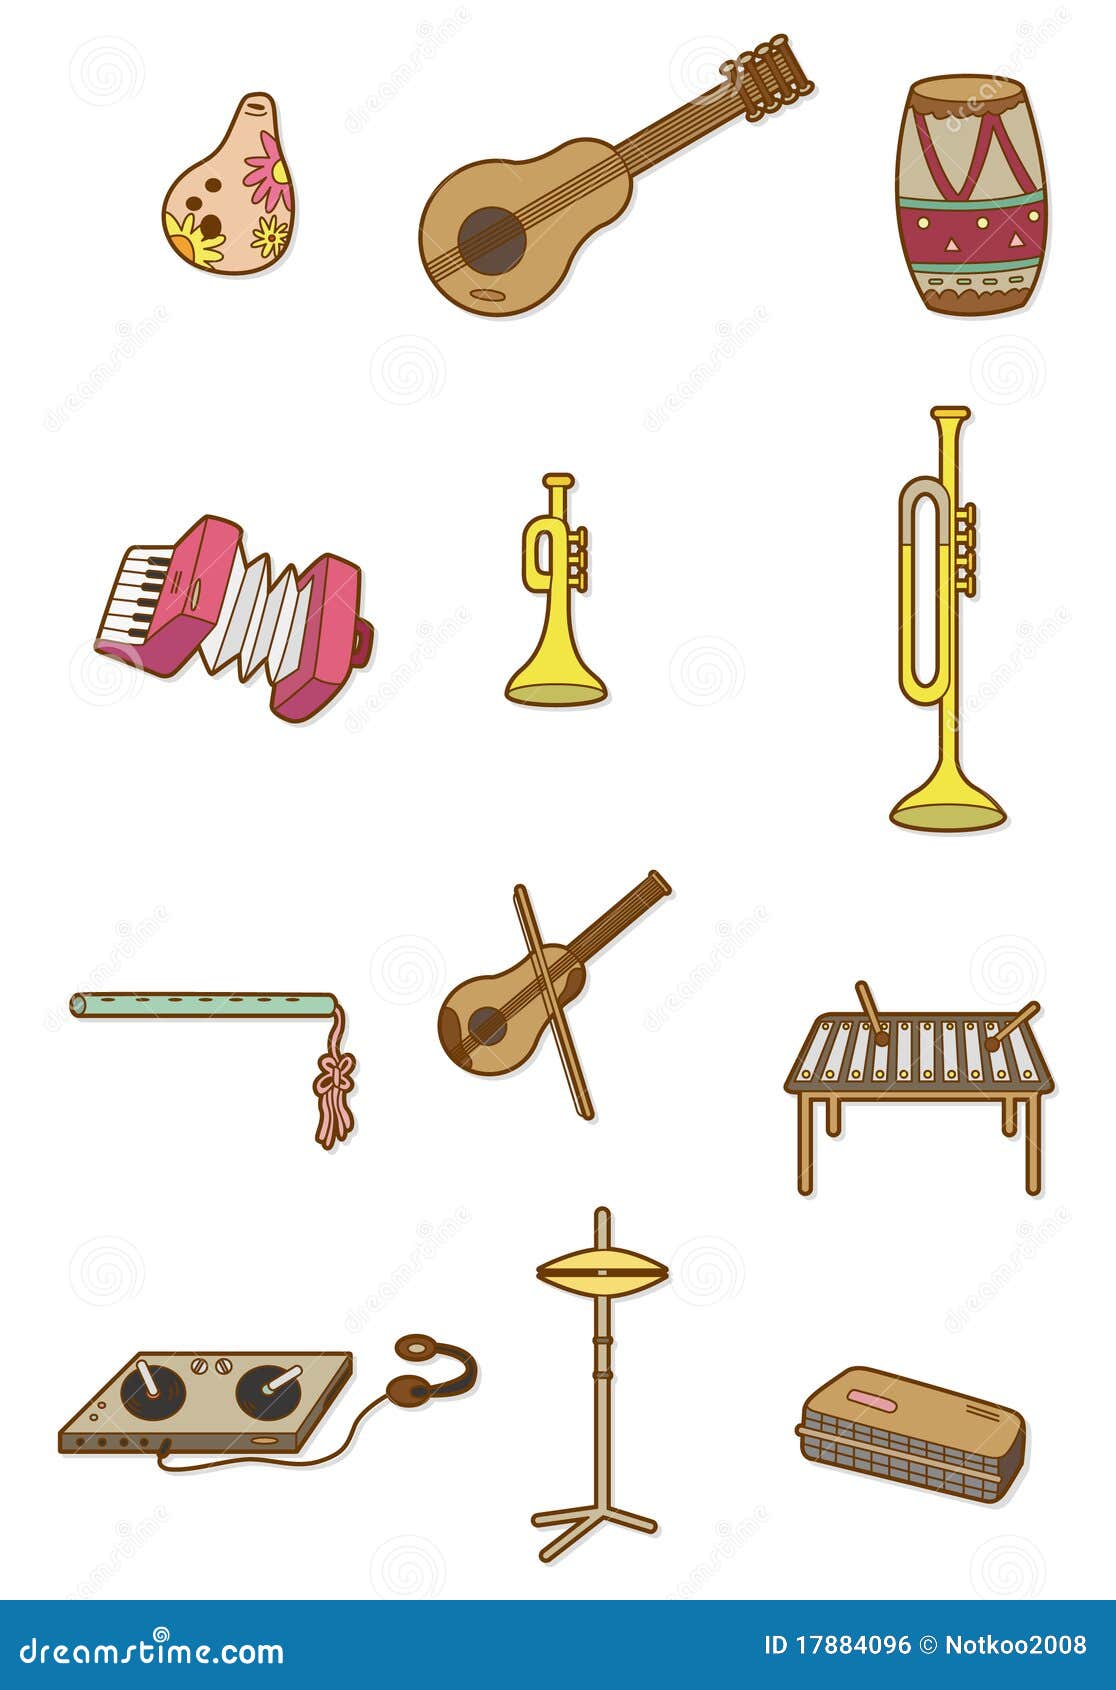 Cartoon Musical Instrument Icon Royalty Free Stock Image - Image: 17884096